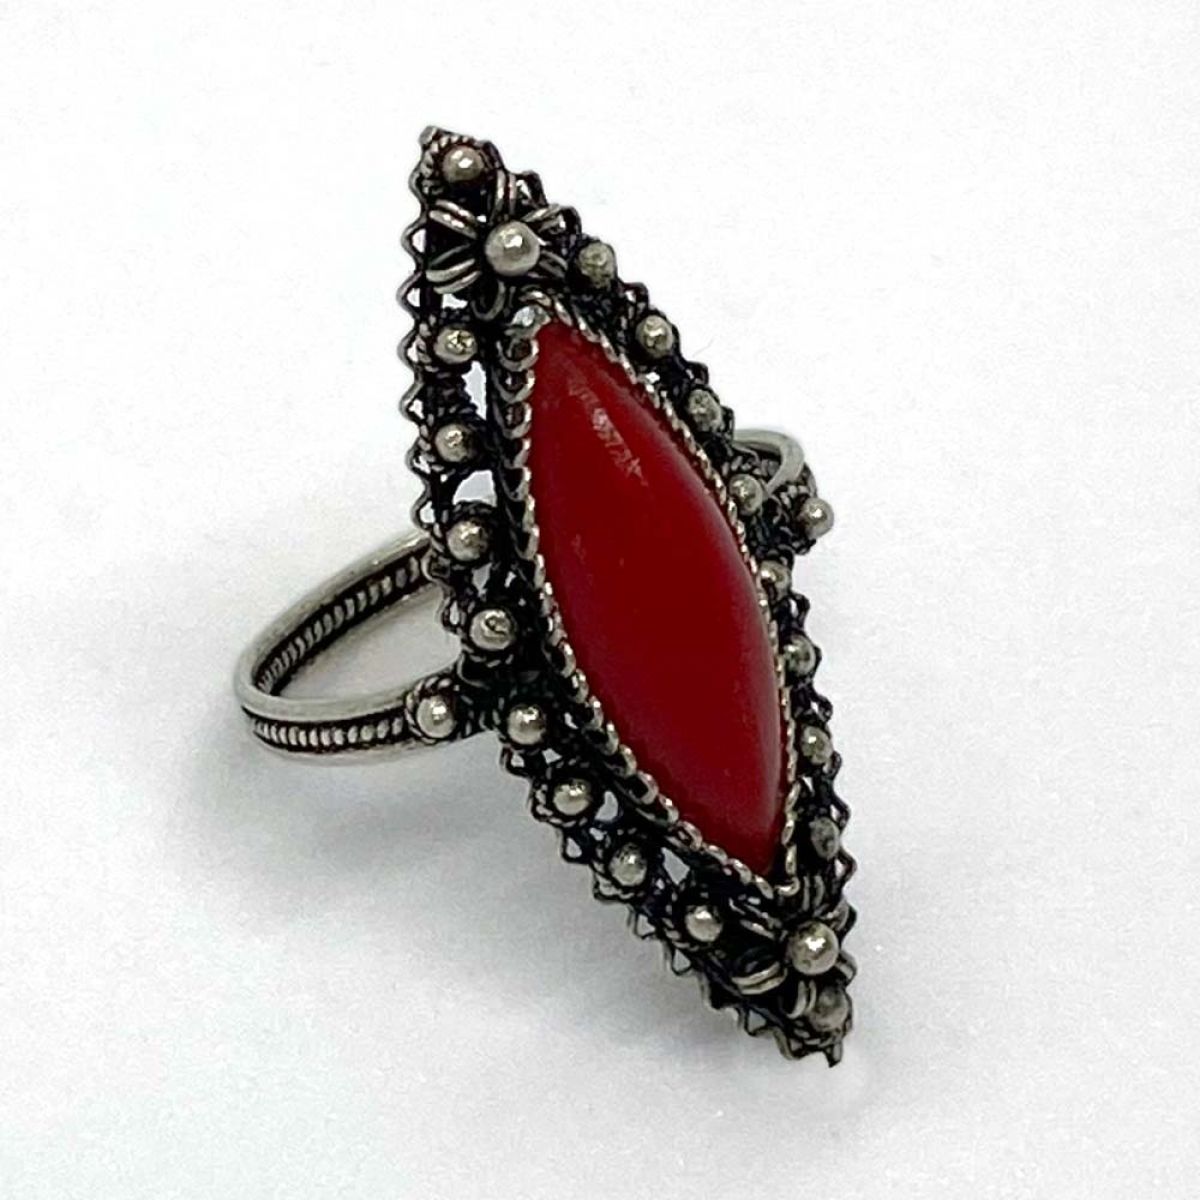 Srebrni prsten s crvenim kamenom u sredini